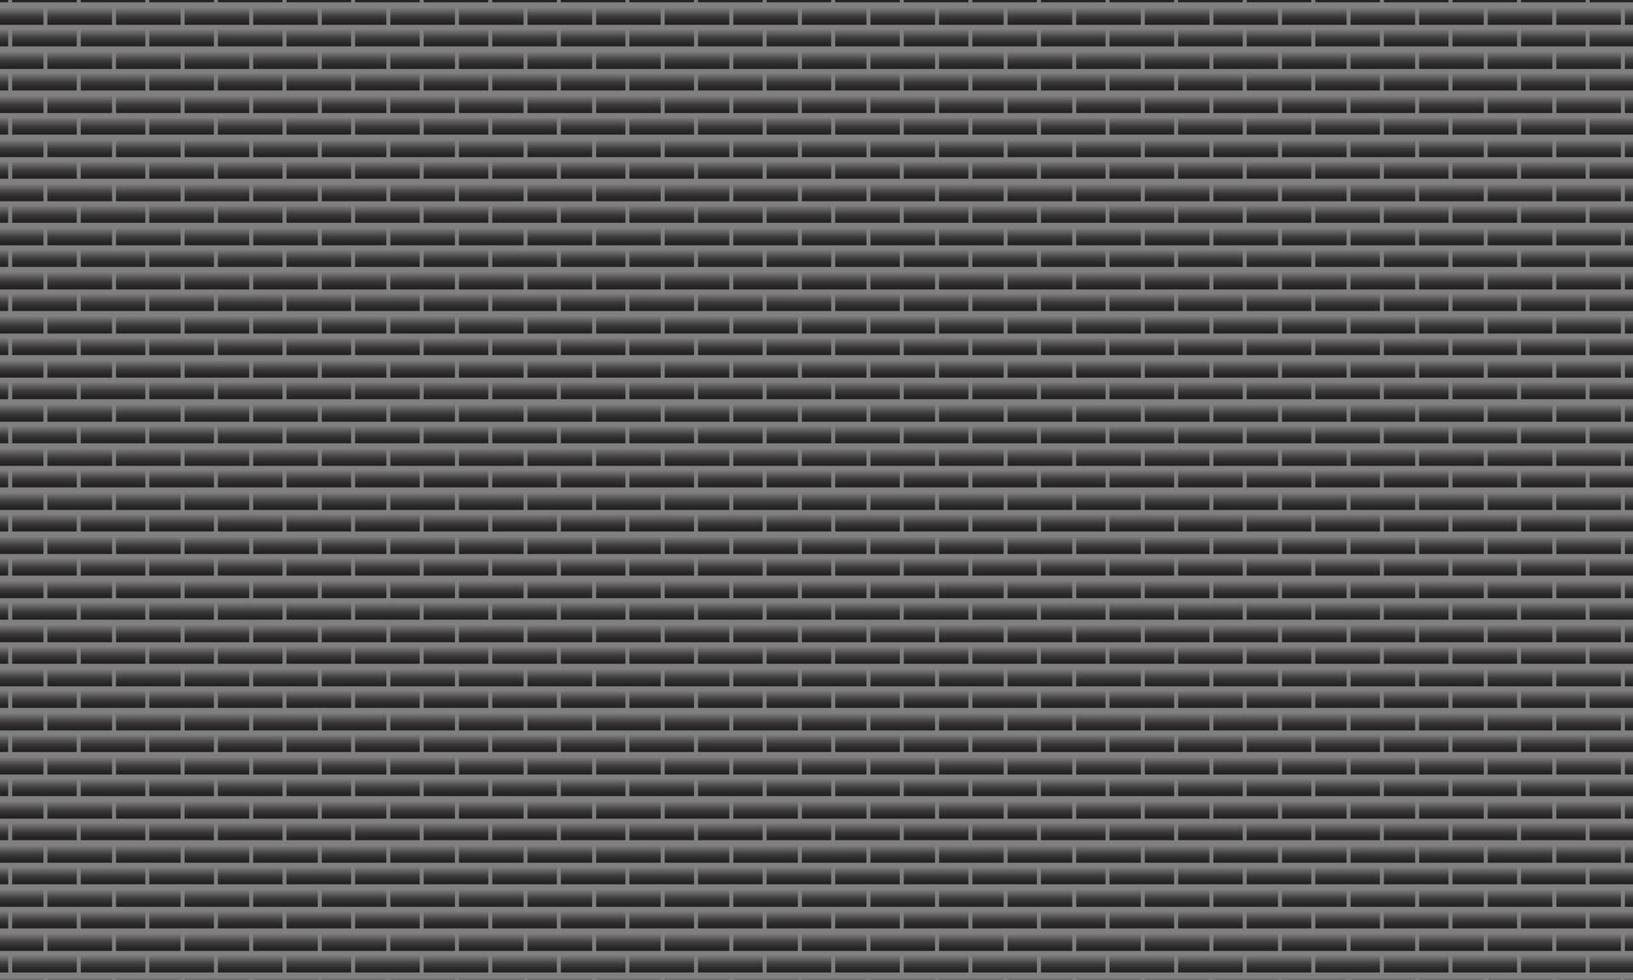 black brick arrangement background vector